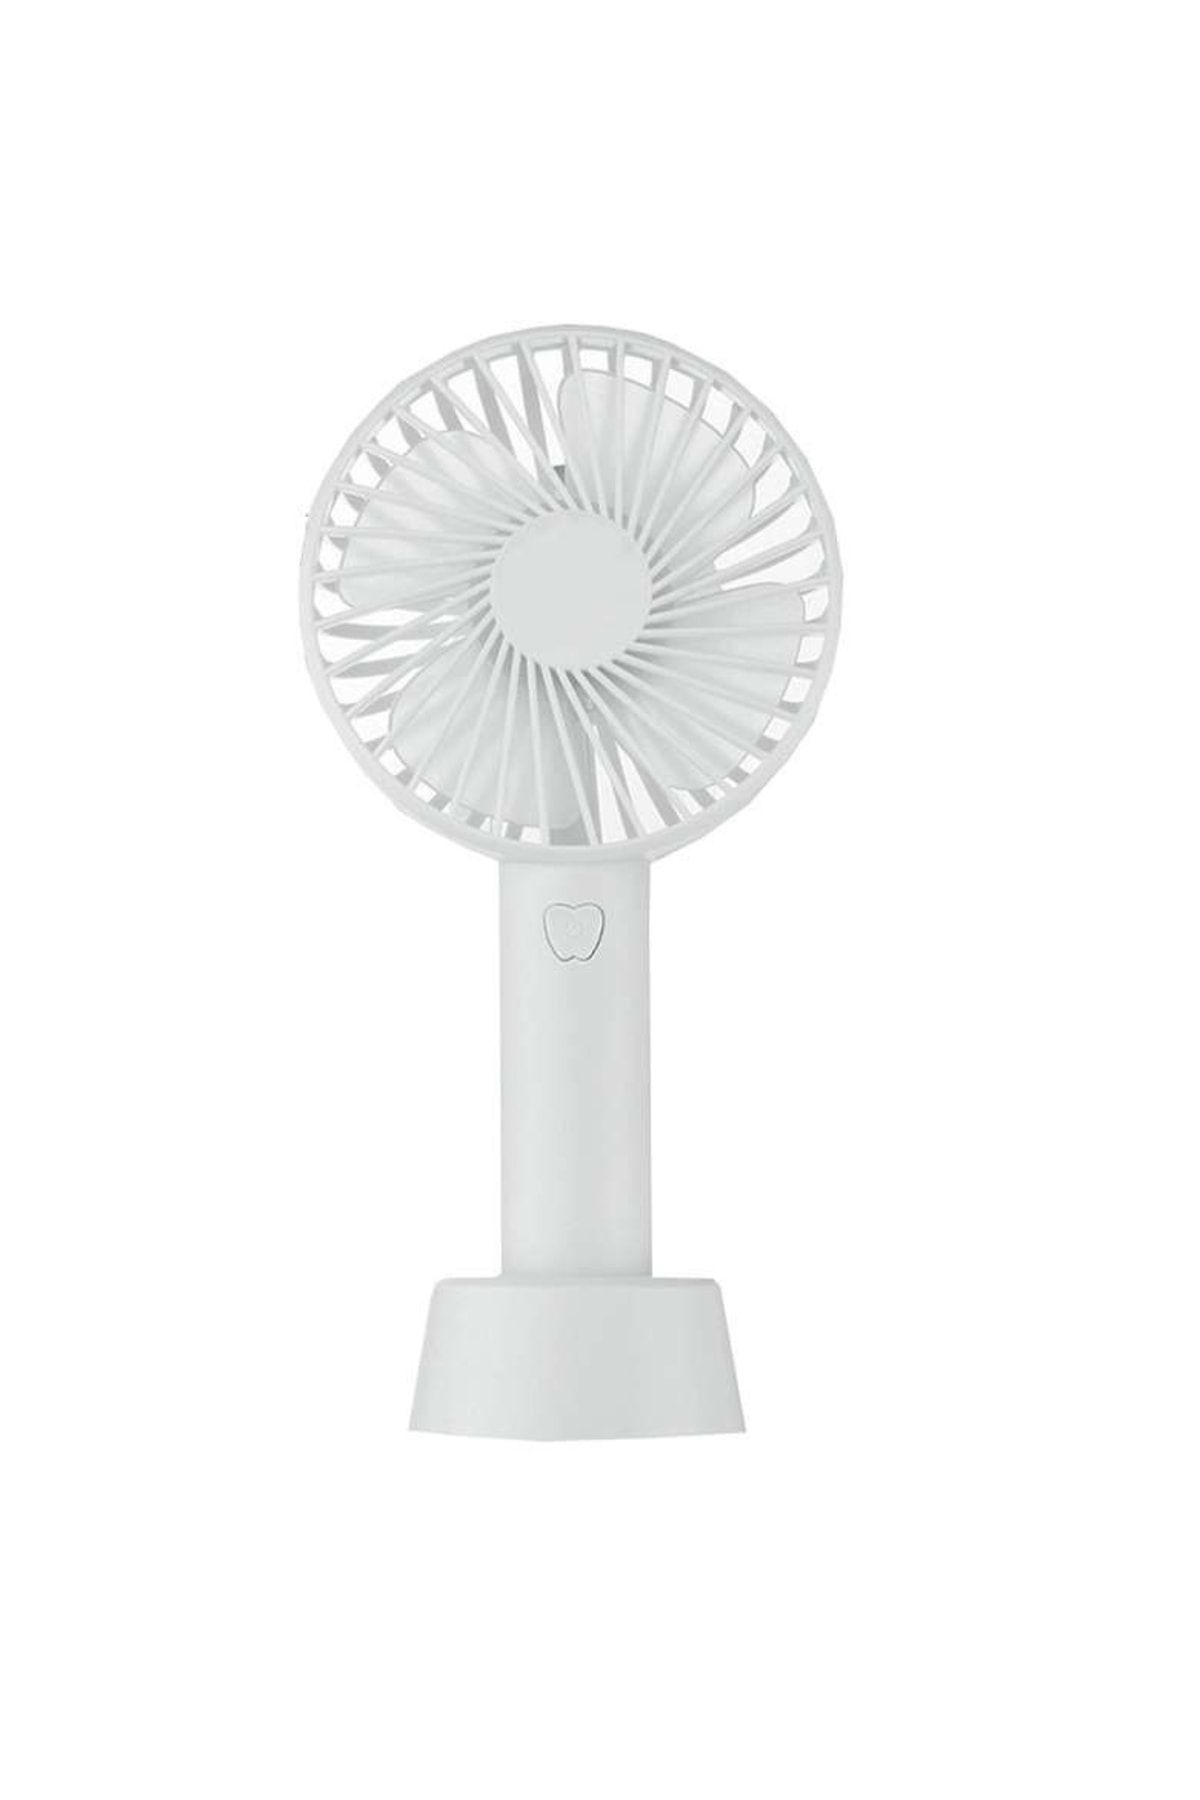 Piranha Mini Vantilatör (el Fanı) / Cooling Fan 5405 Beyaz